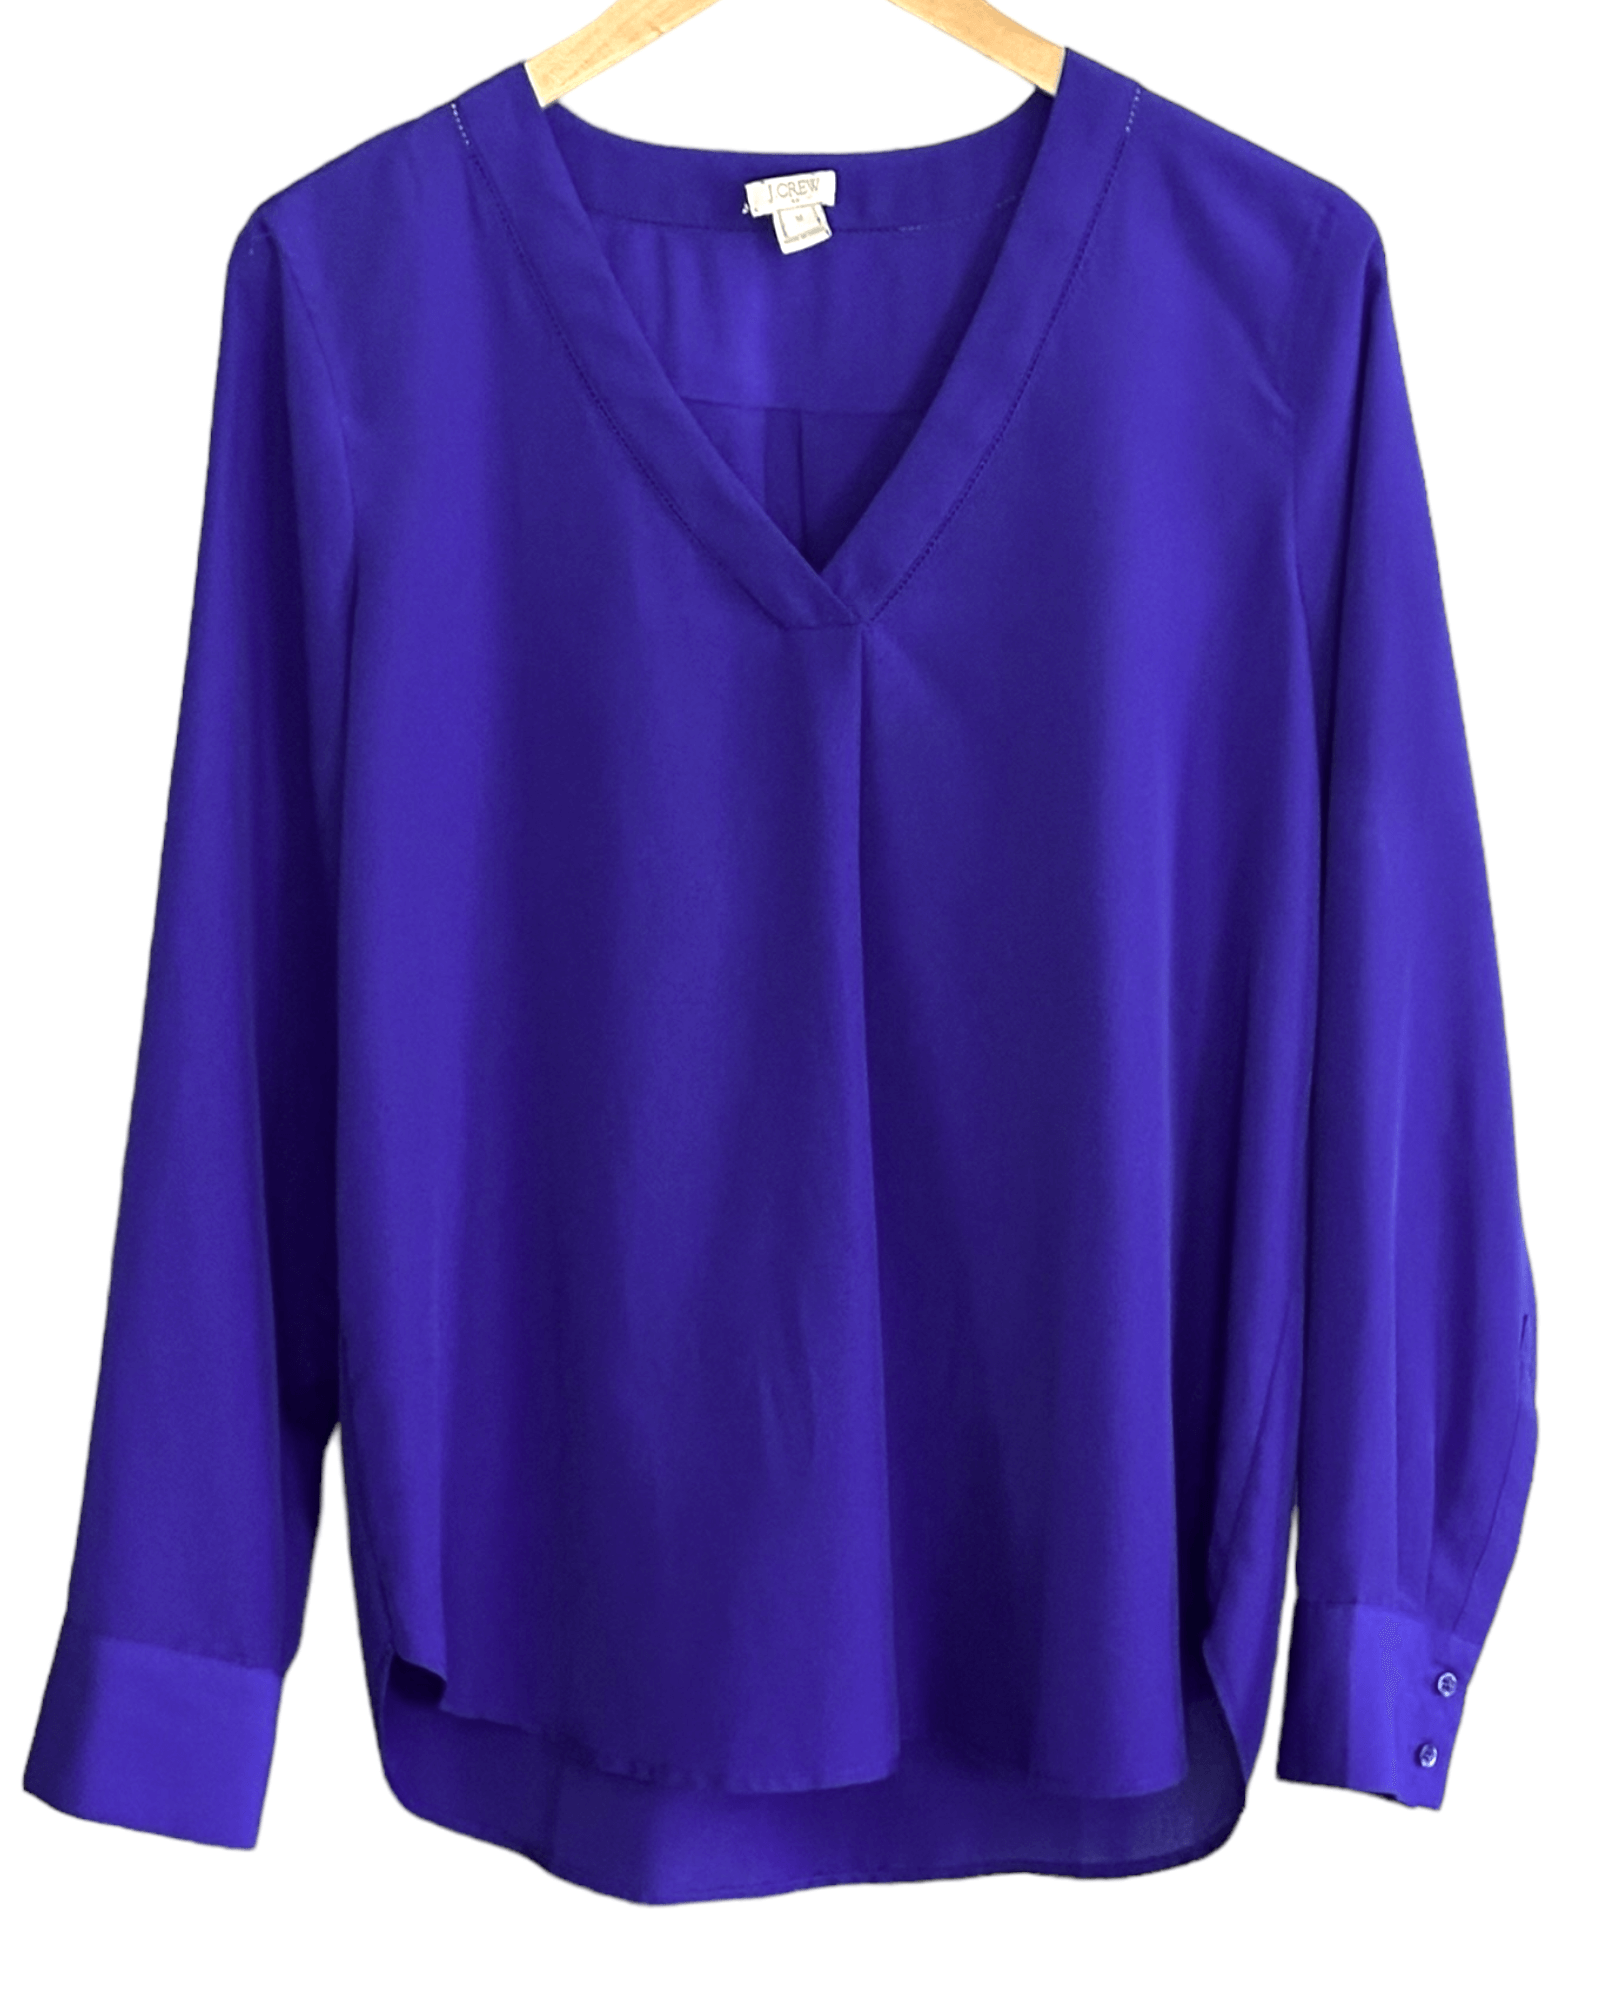 Cool Winter J.CREW violet v-neck front pleat blouse